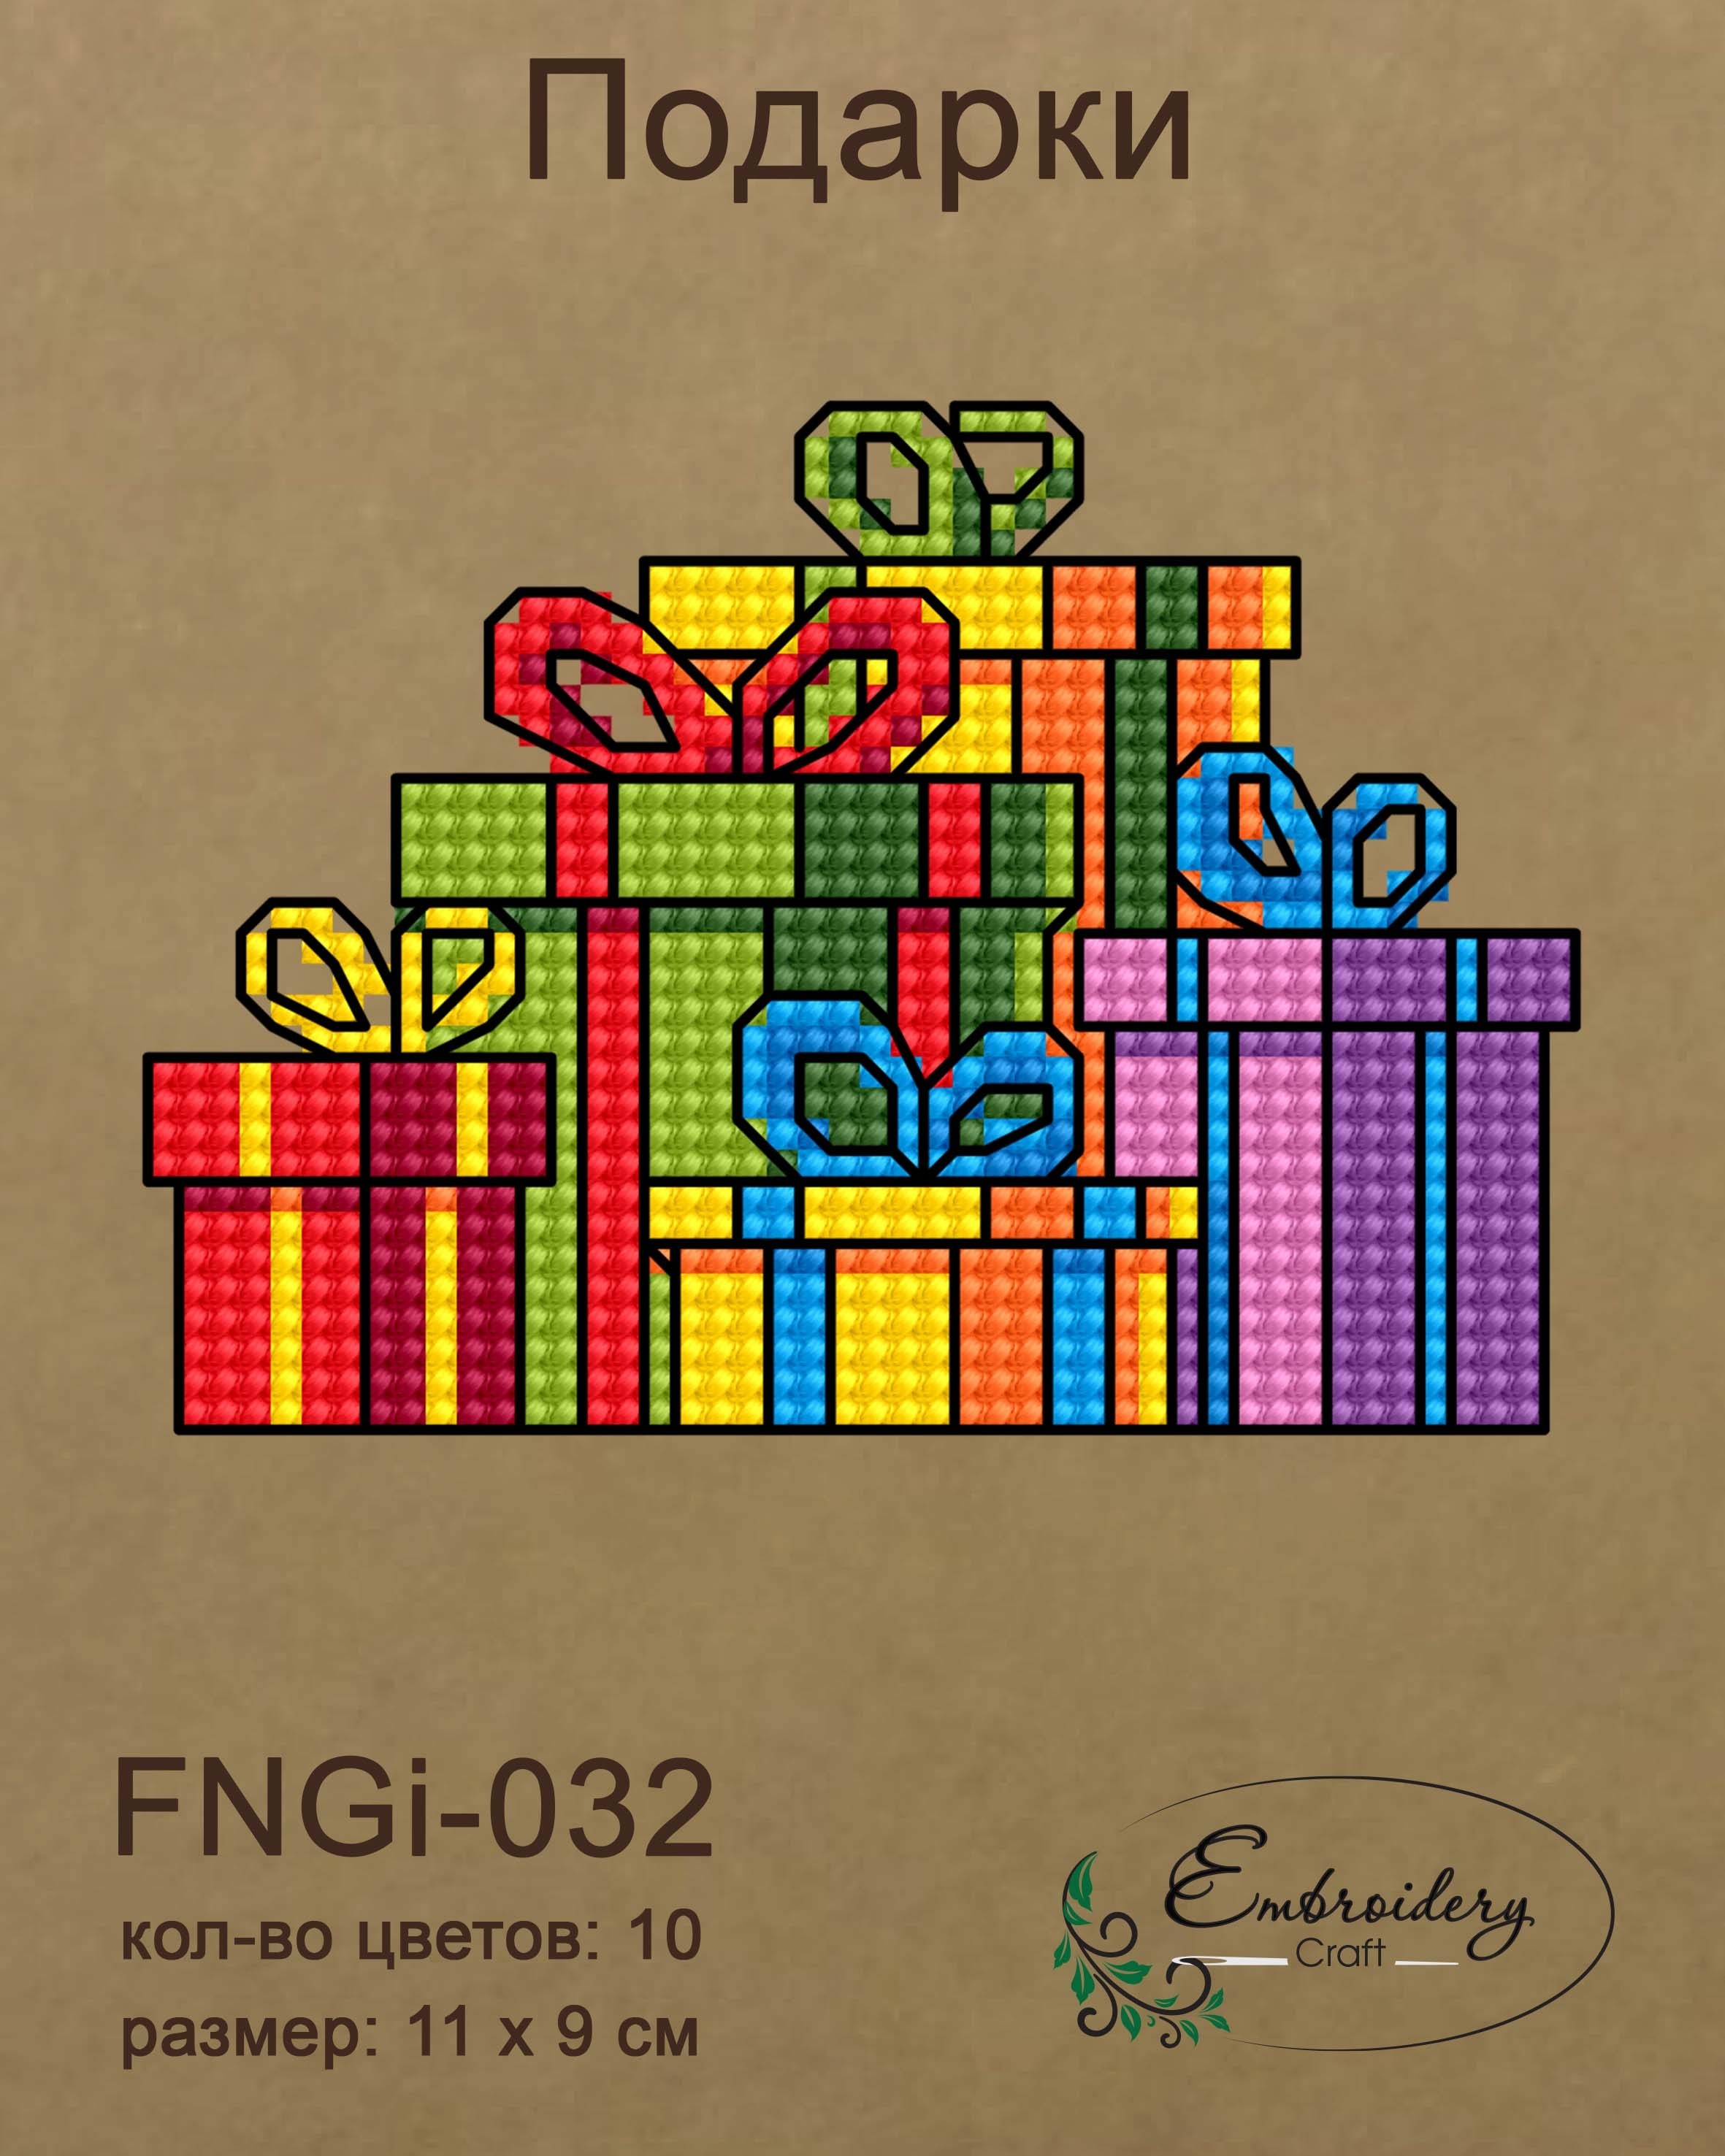 FNNGi-032 Подарки